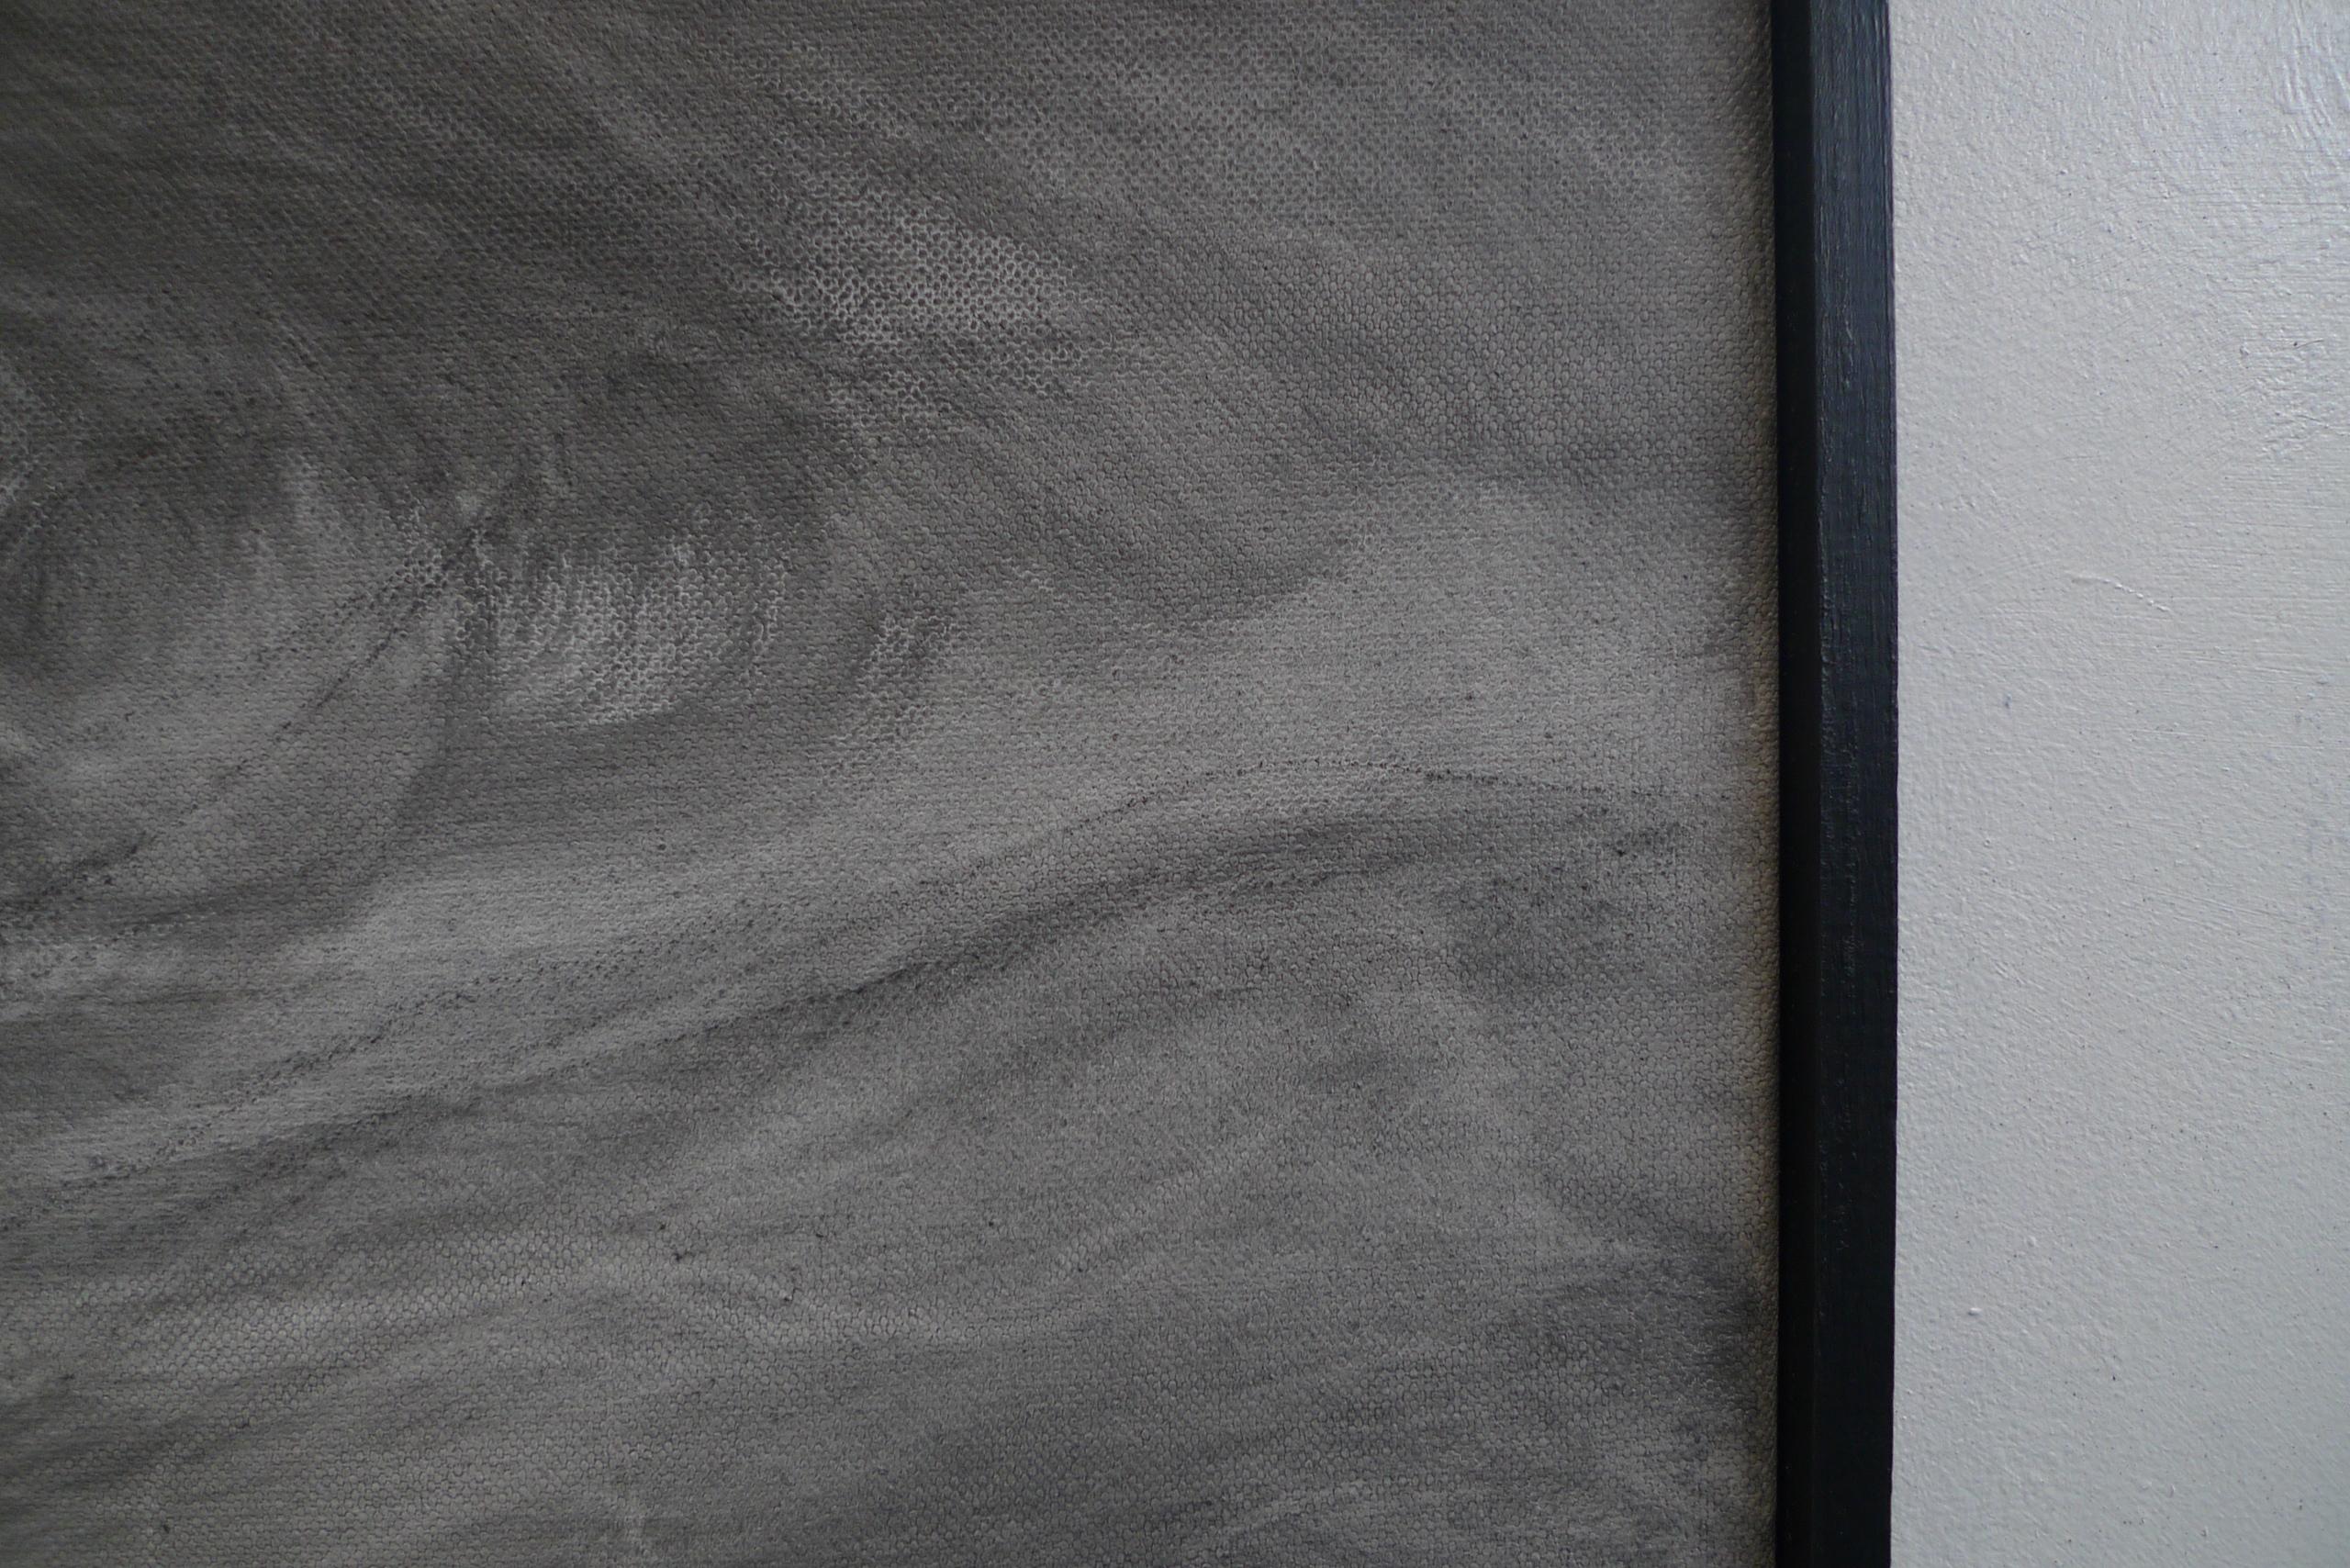 Waves by Franco Salas Borquez - Contemporary seascape painting, ocean, dark tone For Sale 4